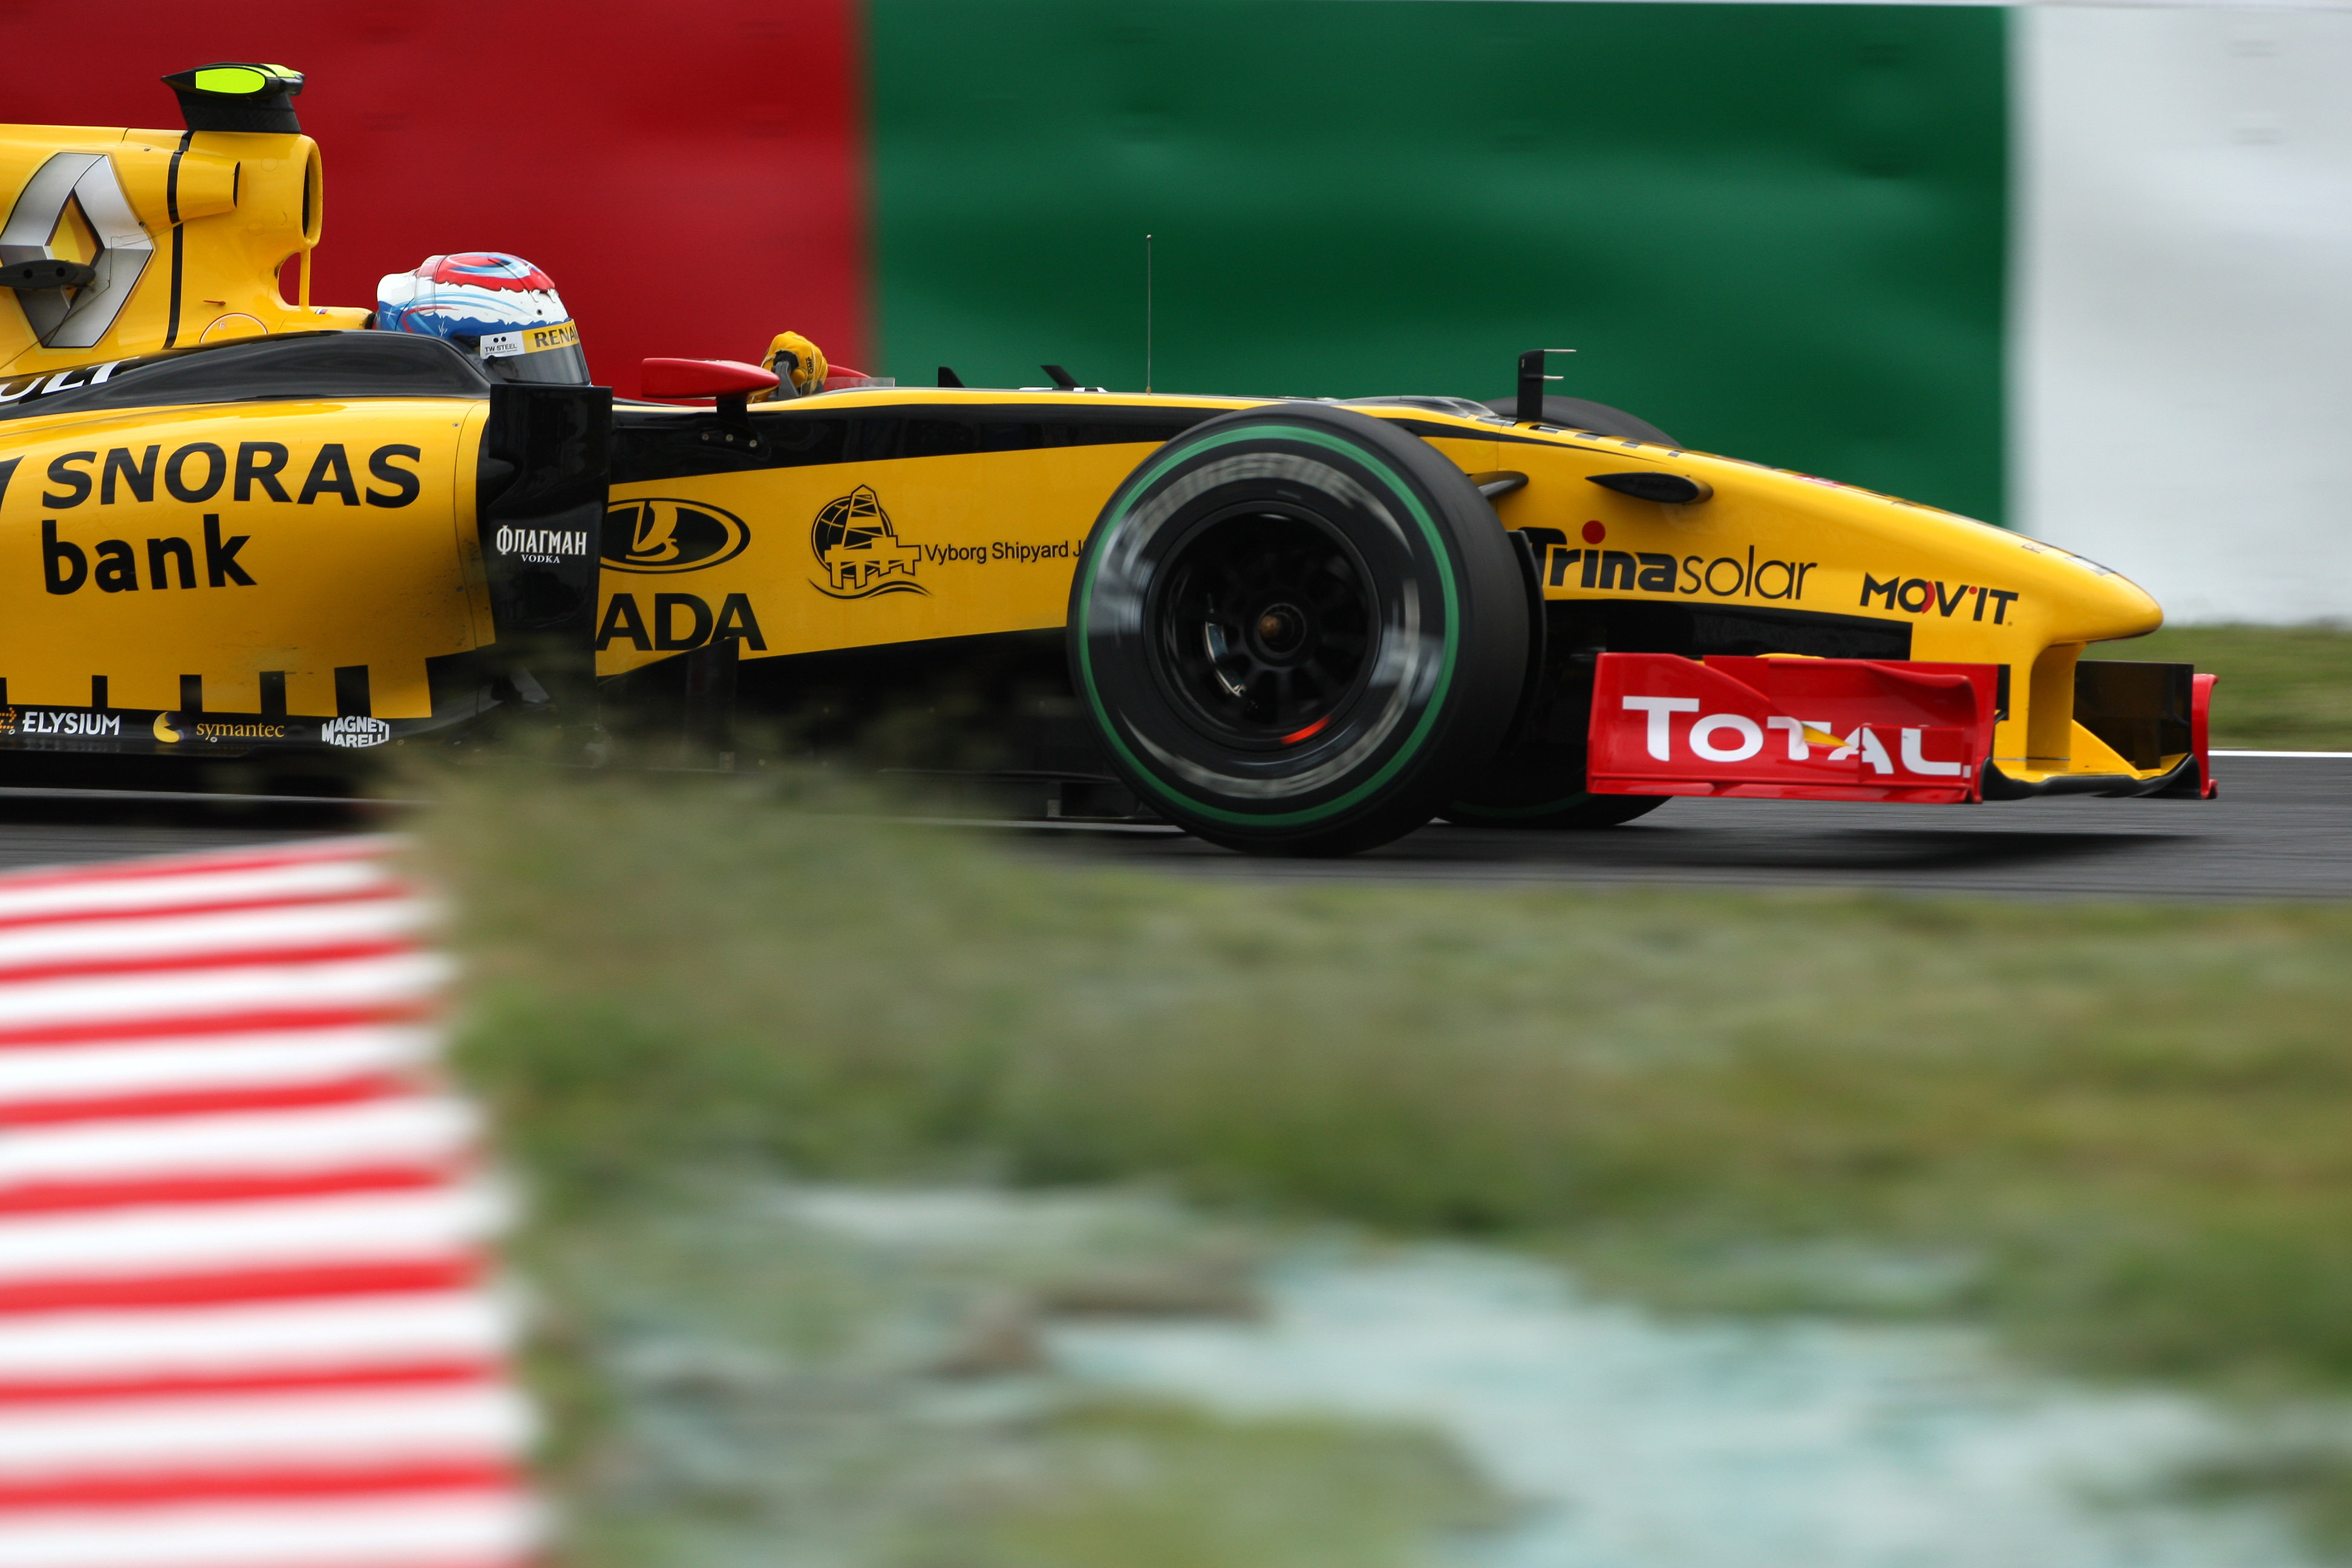 Pirelli nodigt teams uit voor eerste test met oude Renault